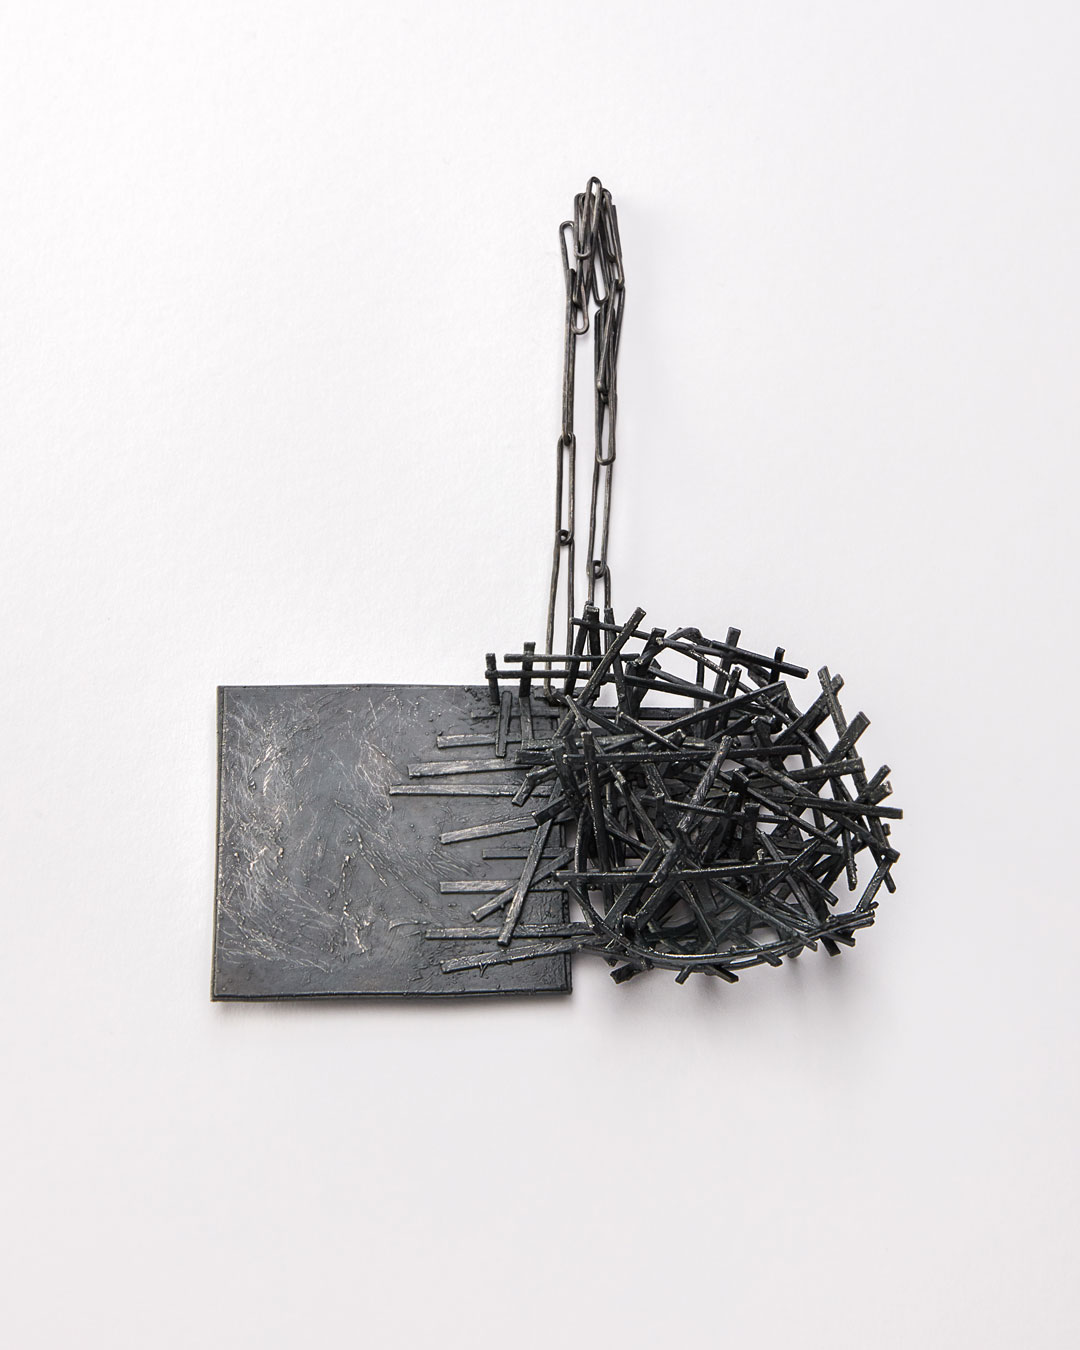 Iris Bodemer, Gegenüberstellung 1 (Juxtaposition 1), 2019, pendant; silver, thermoplastic, 90 x 140 x 40 mm, €4250